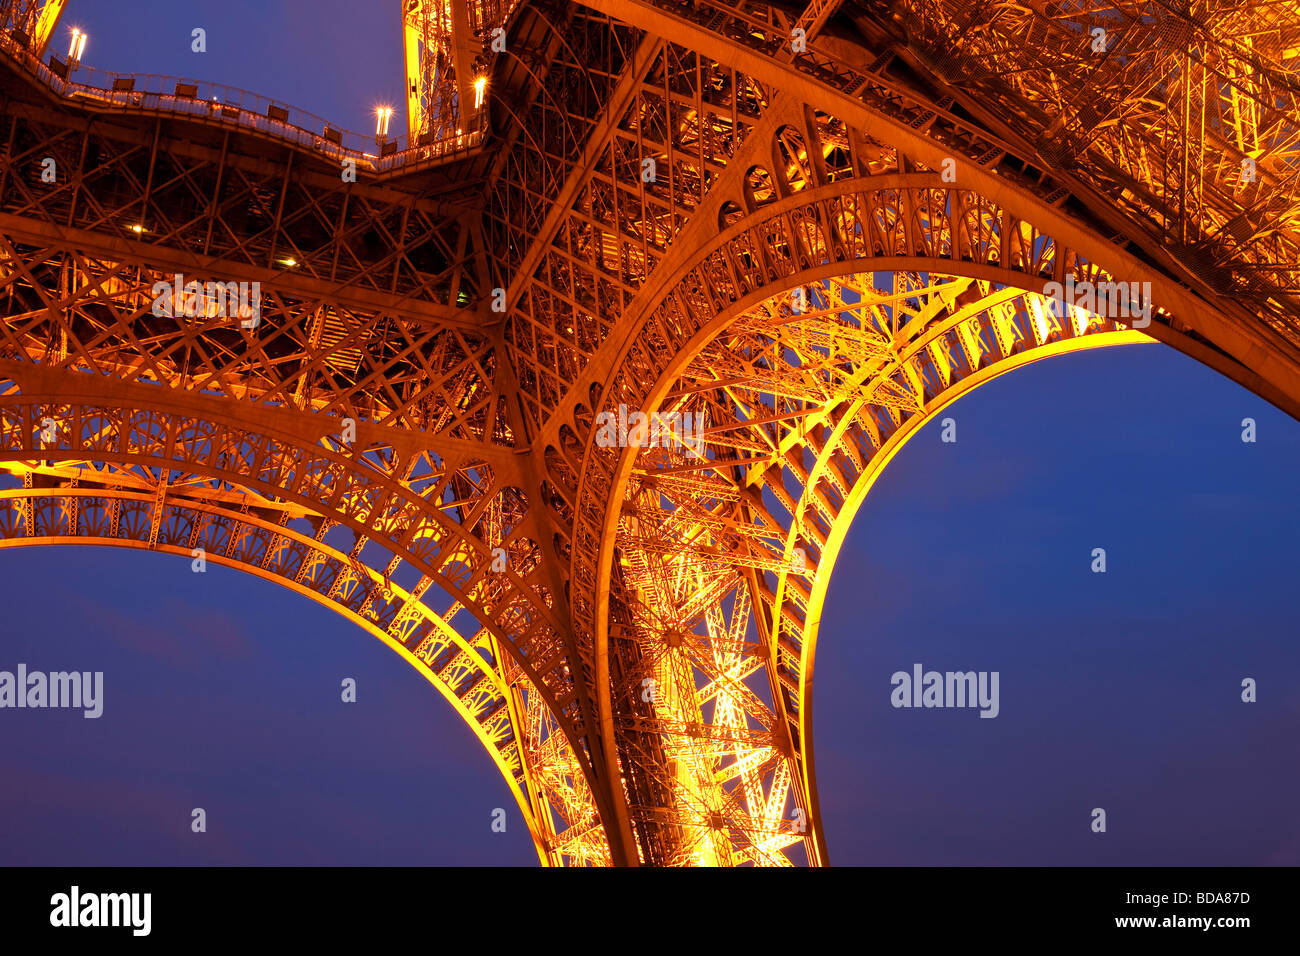 Eiffel Tower at night, Paris France Stock Photo